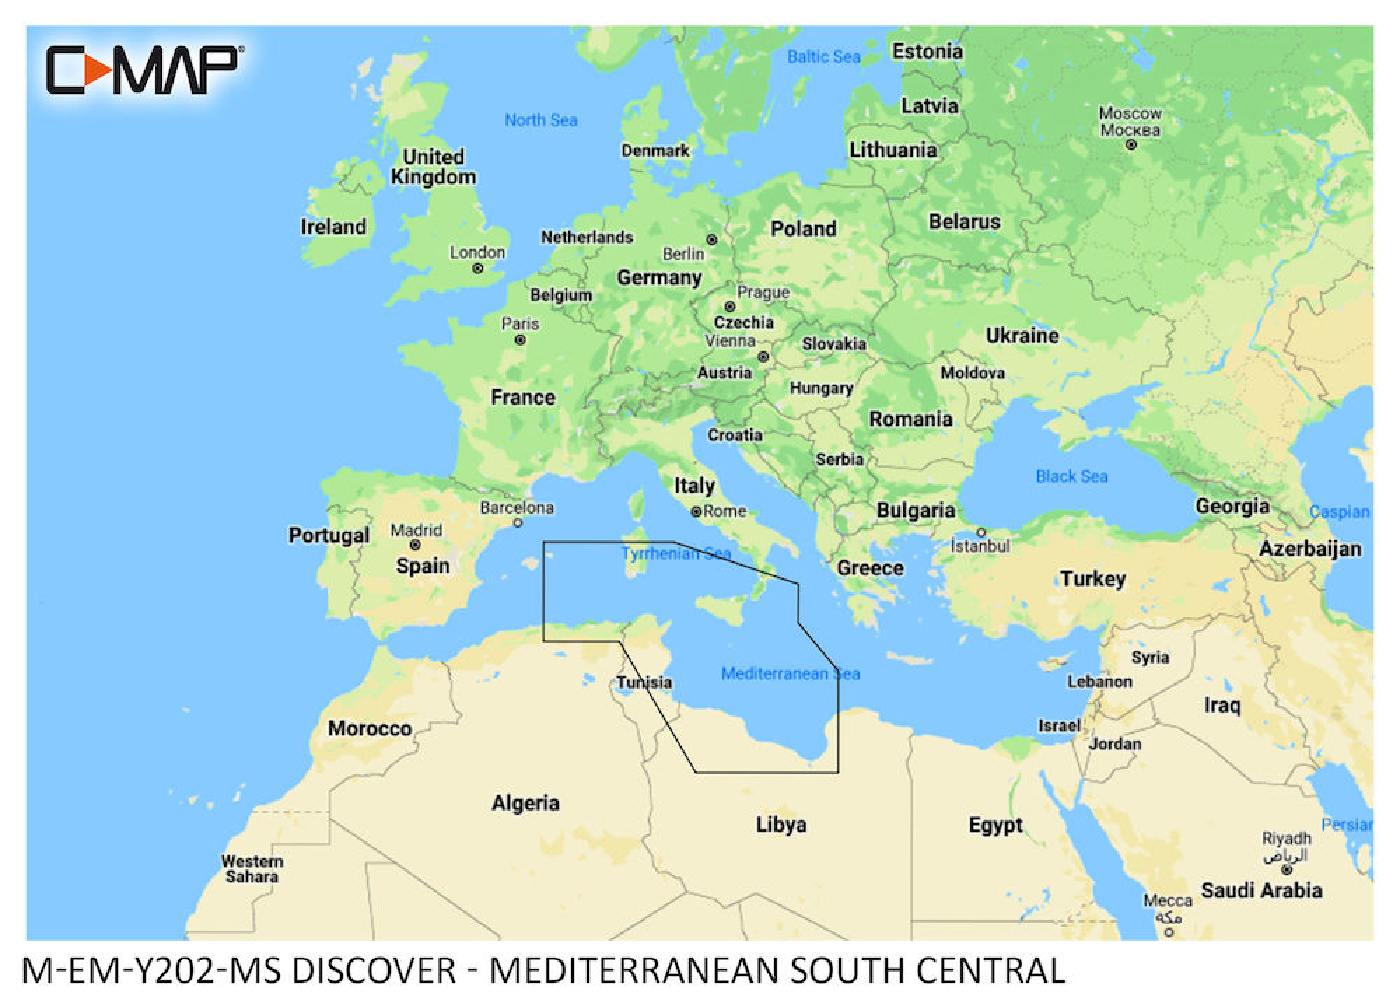 C-MAP Discover Mediterranean South Central M-EM-Y202